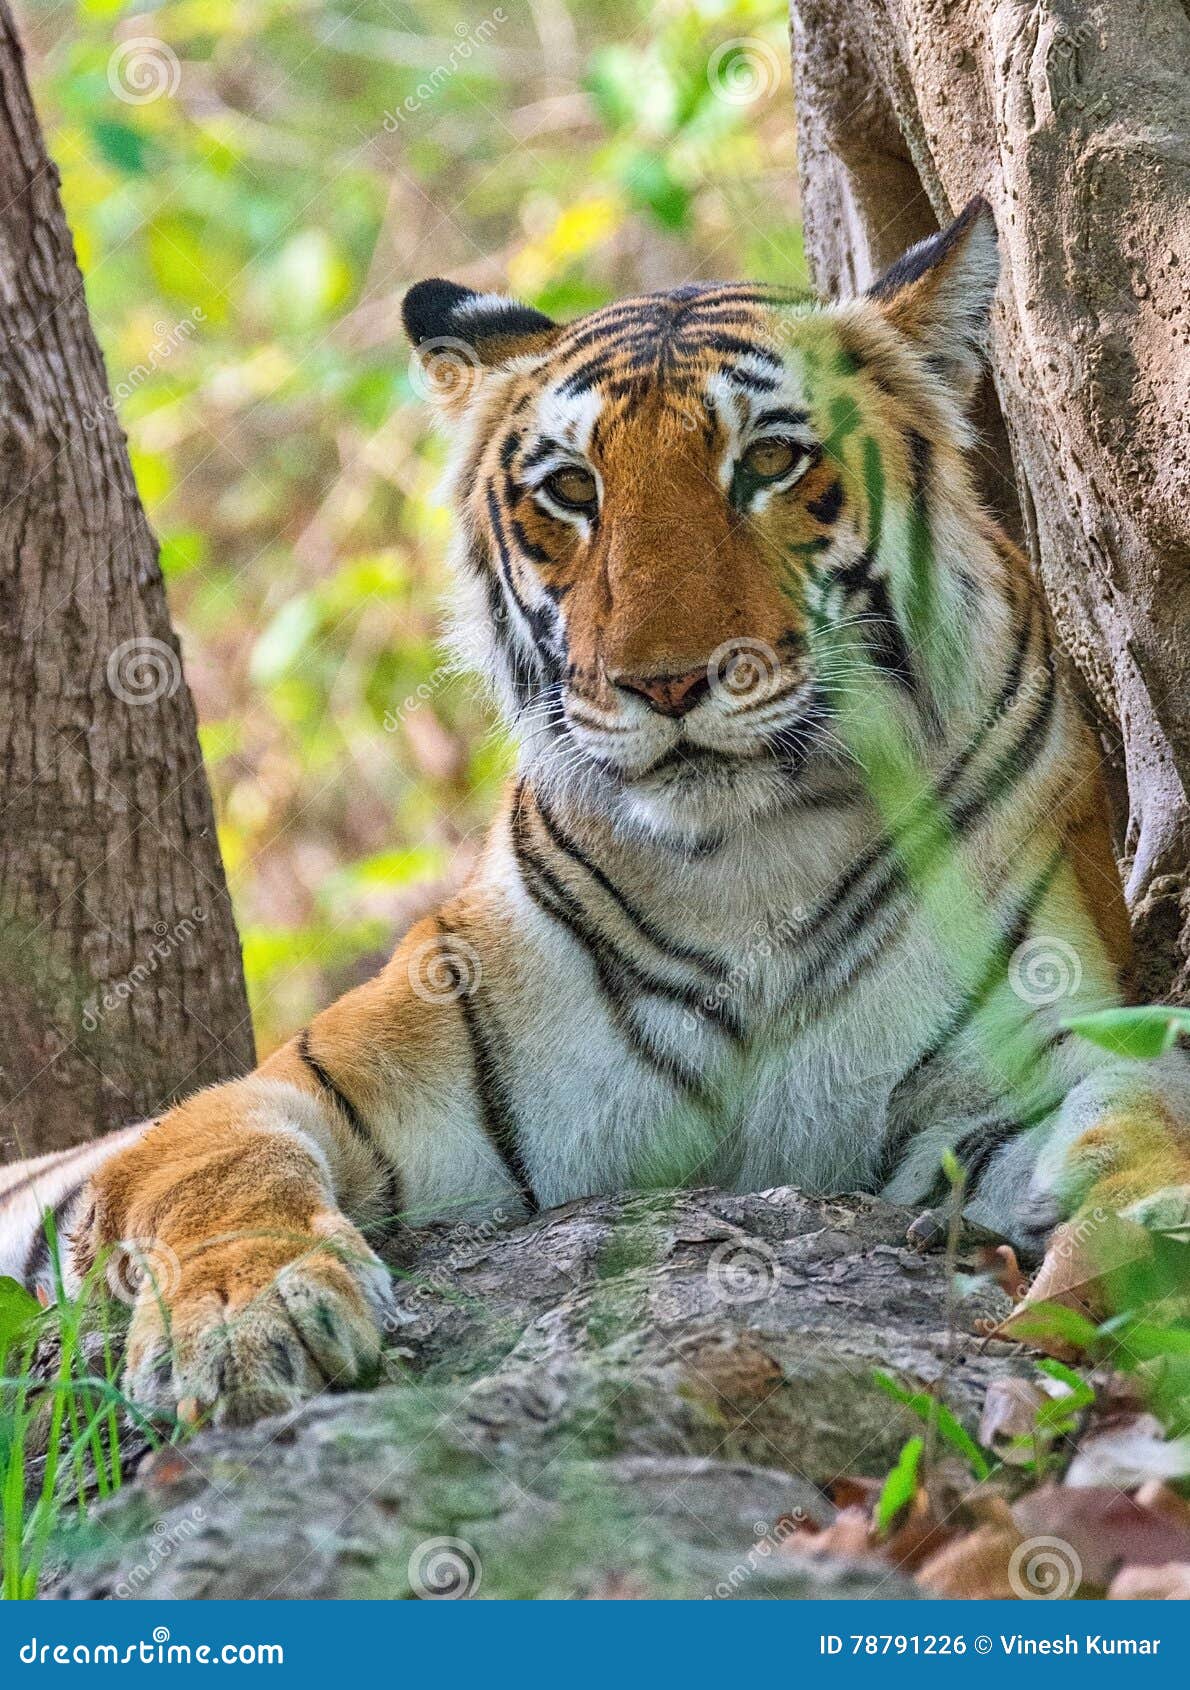 tigress in wild